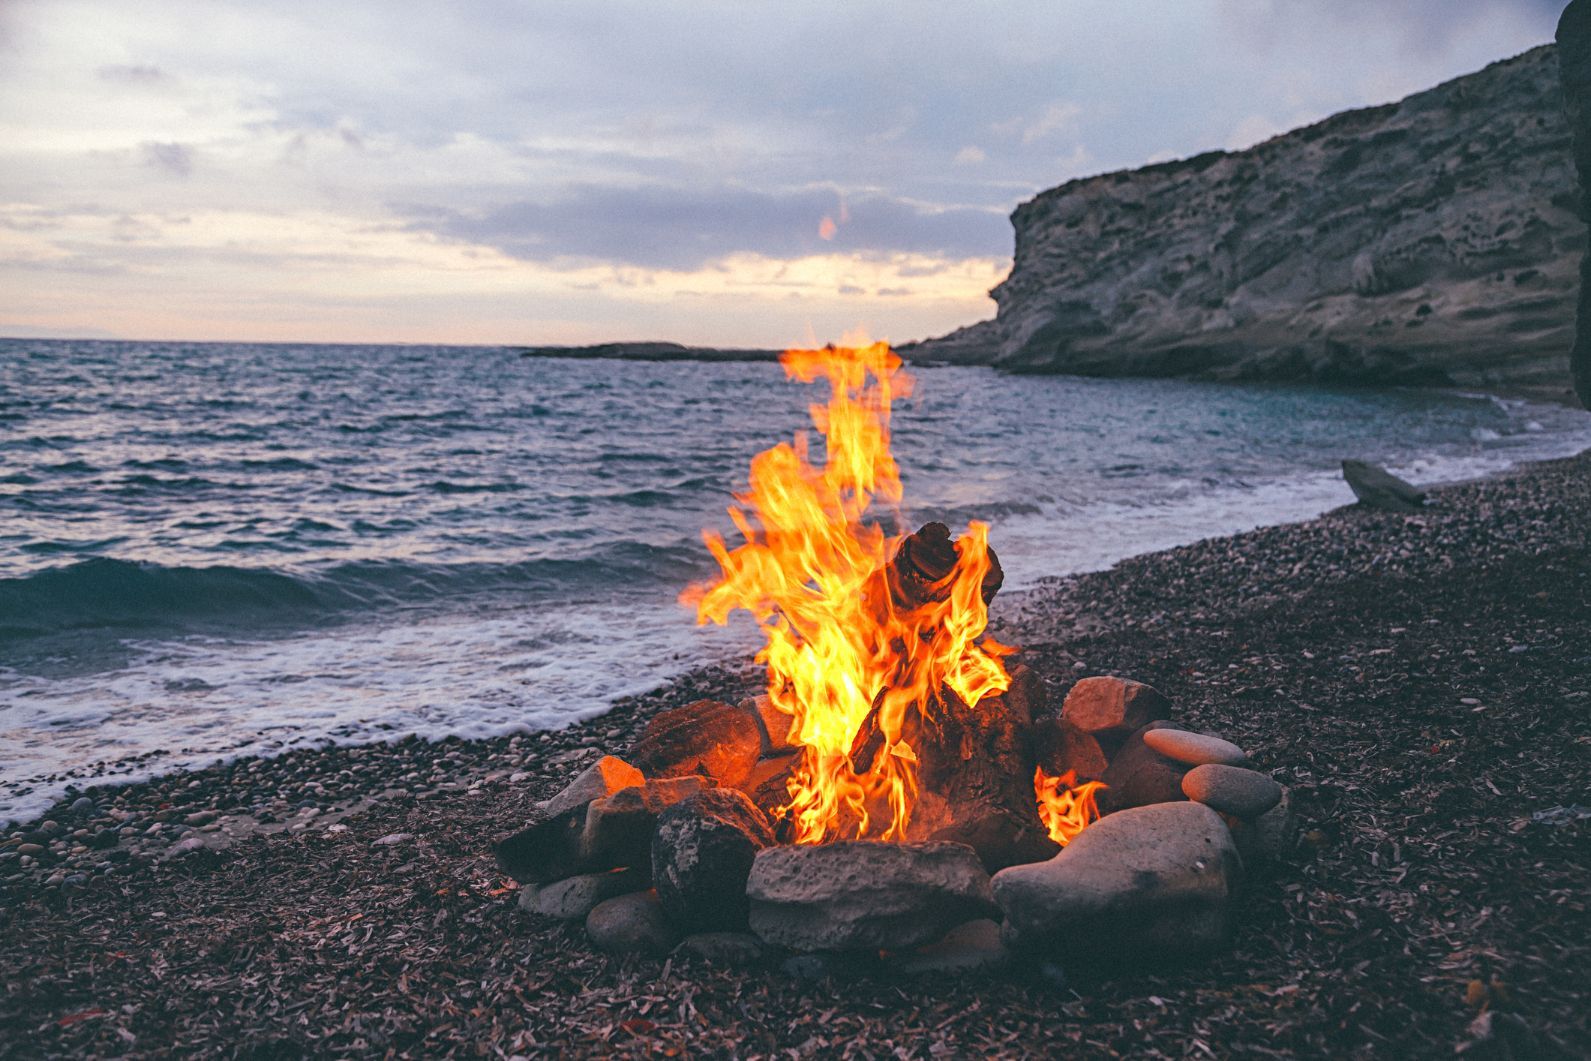 A campfire on a pebble beach